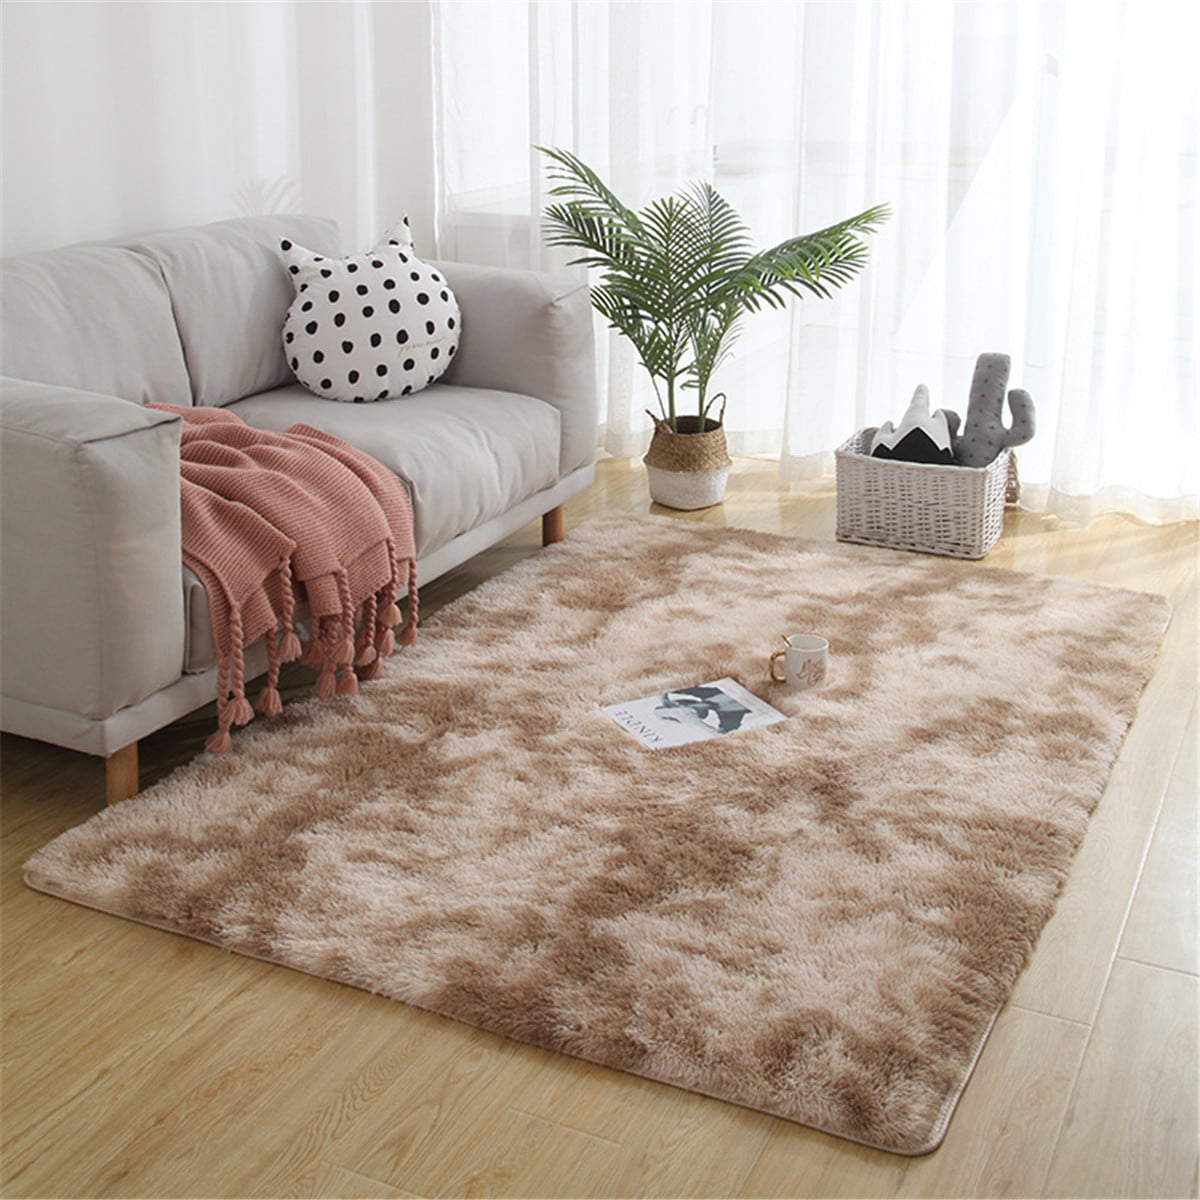 60*180cm Fluffy Rugs Shaggy Floor Mat Fur Home Bedroom Hairy Carpet New-Arrival 